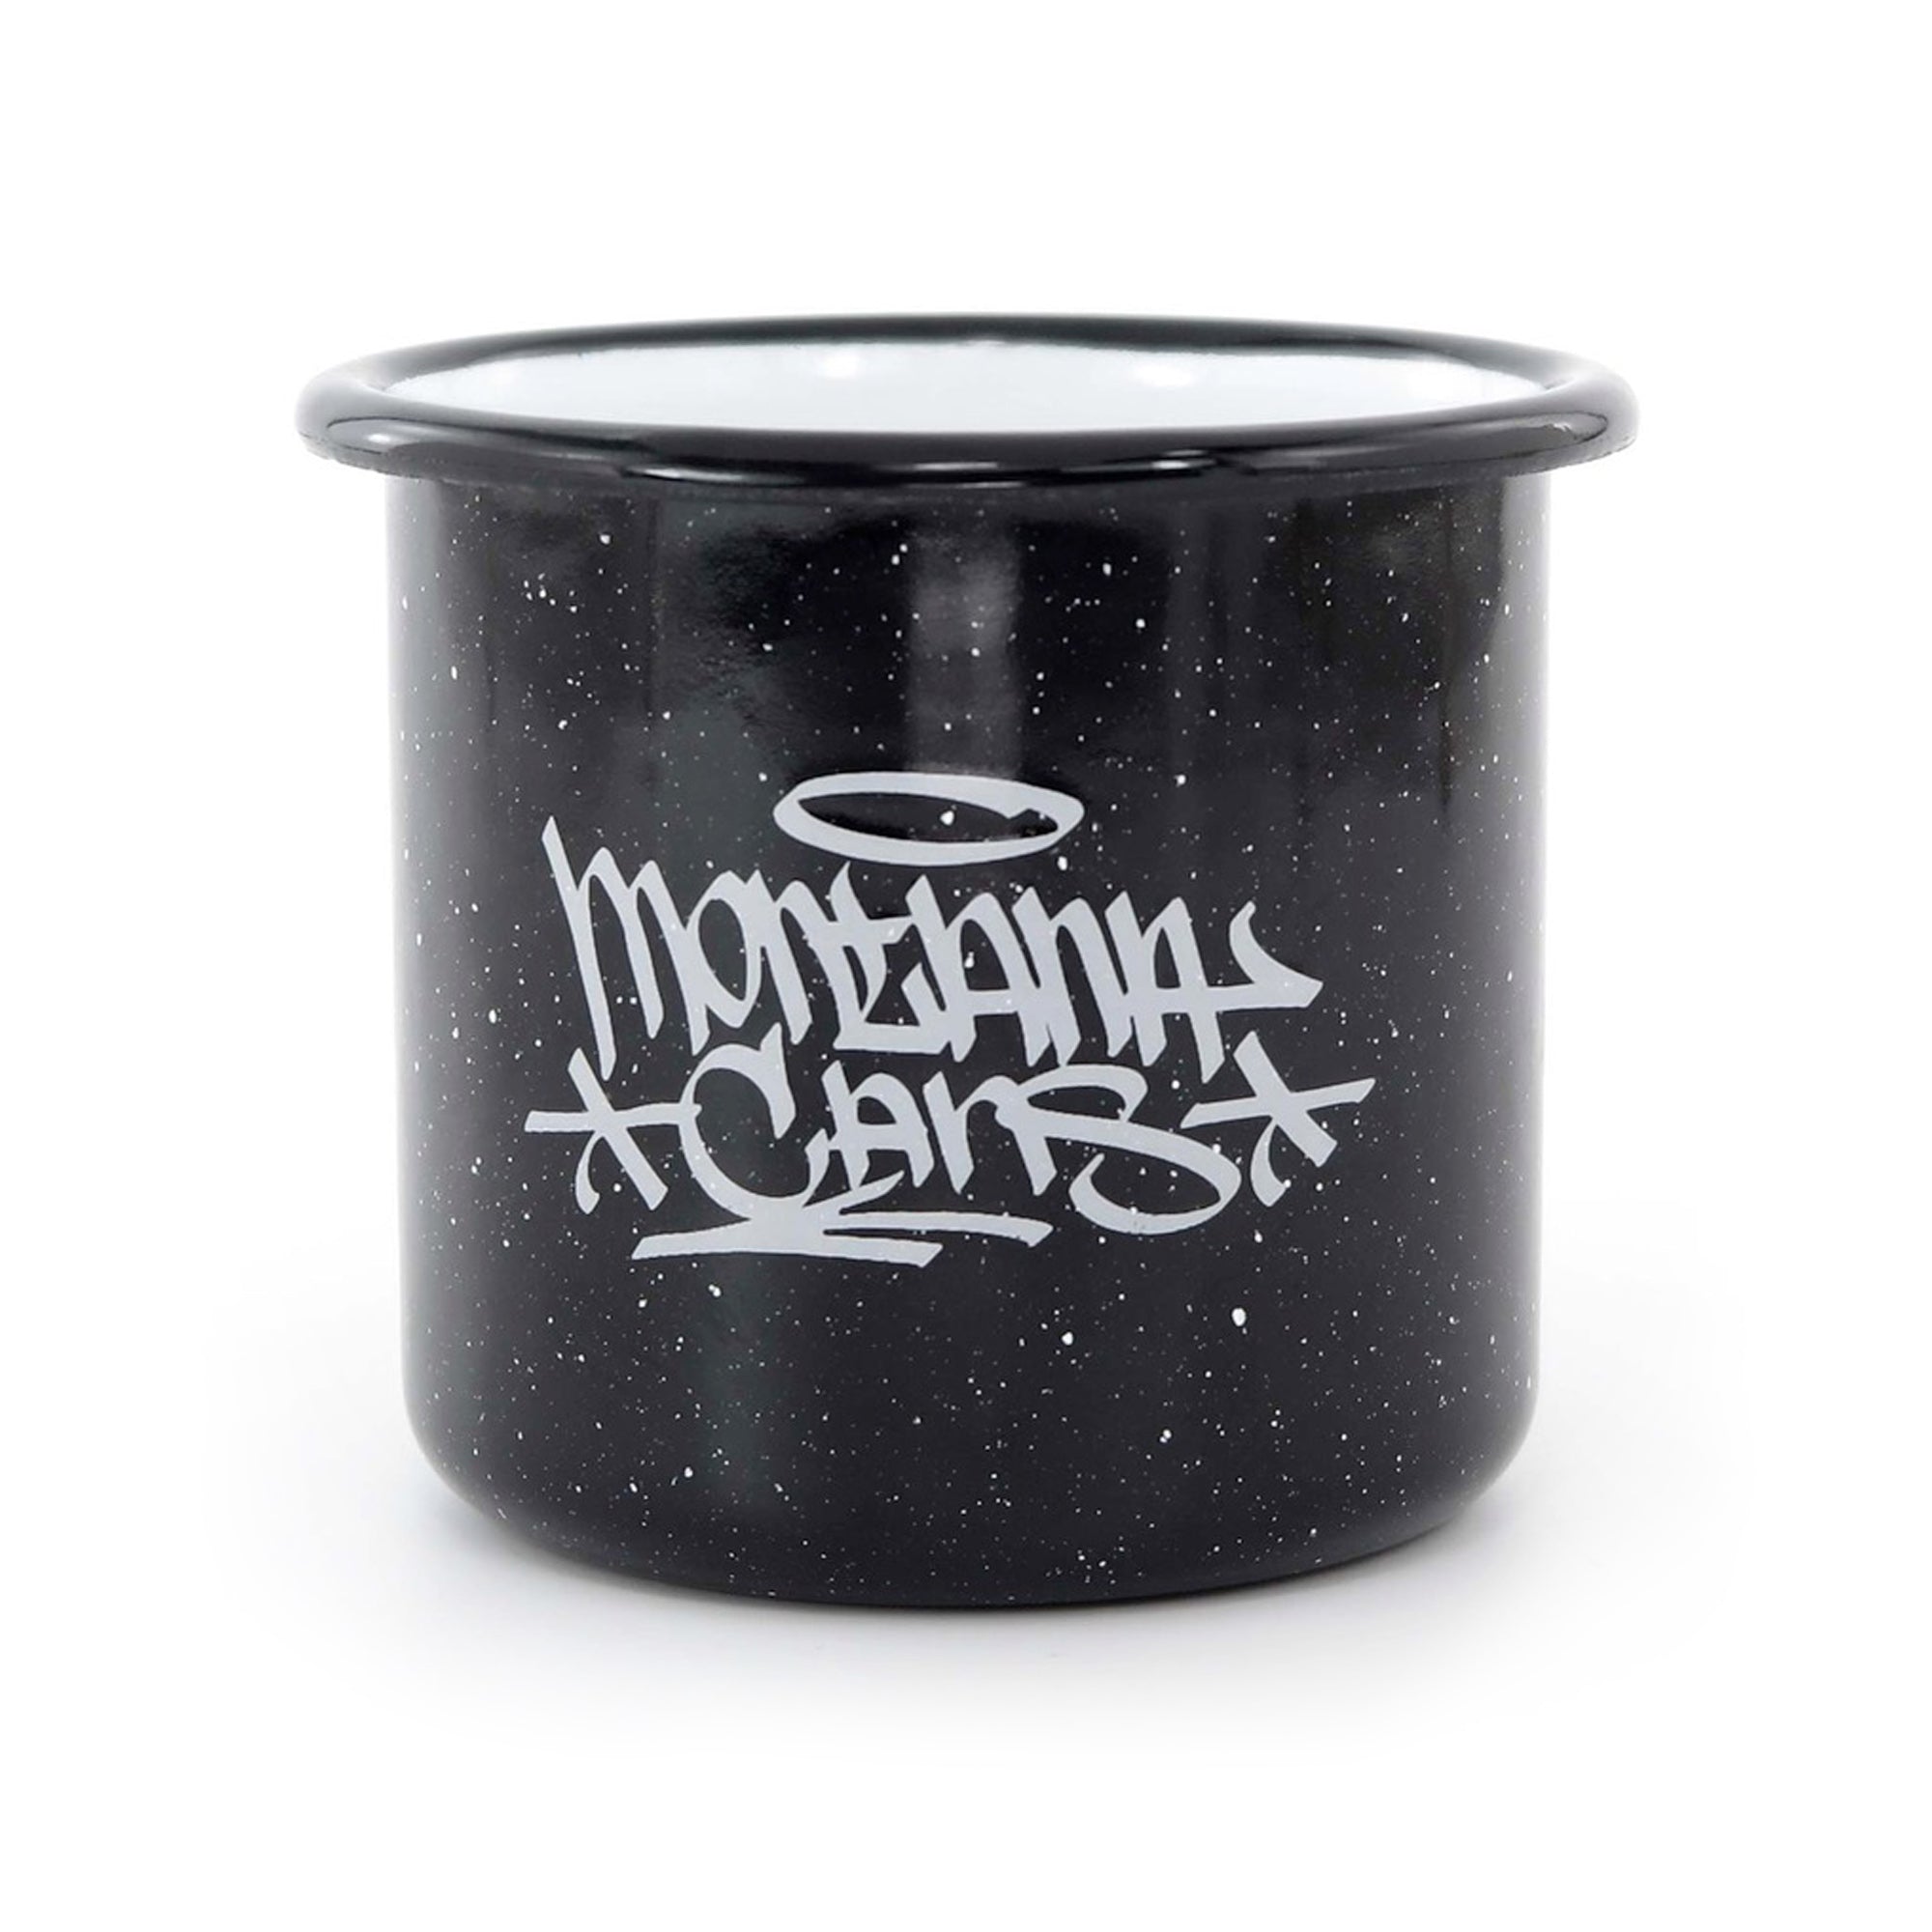 Montana Cans " Tag" Enamel Mug